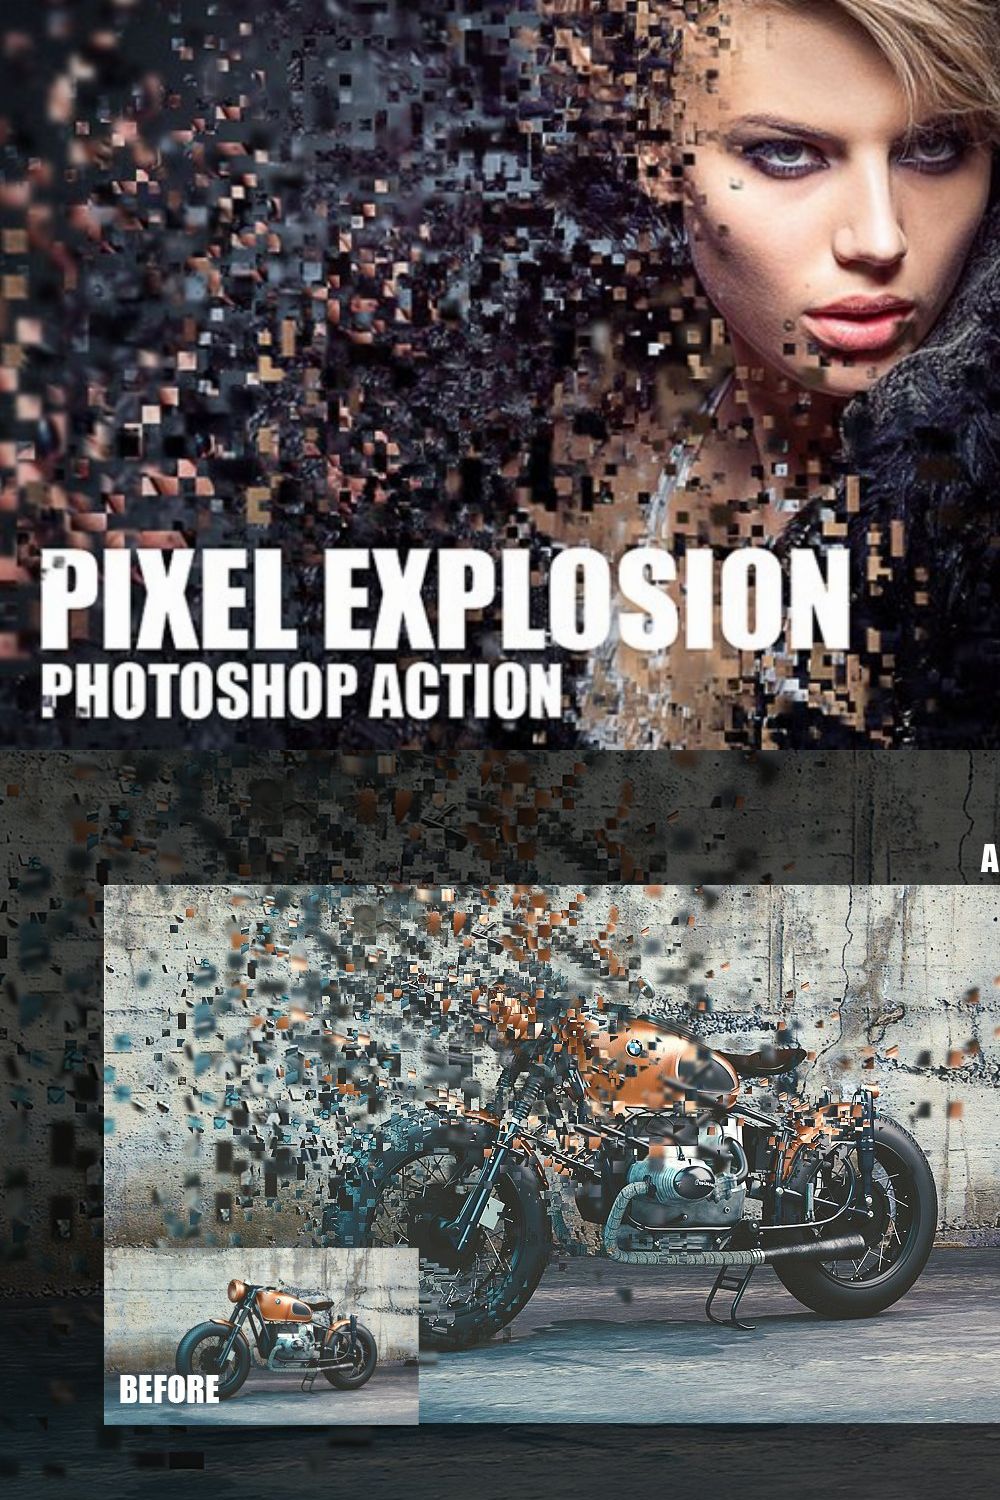 Pixel Explosion Photoshop Action pinterest preview image.